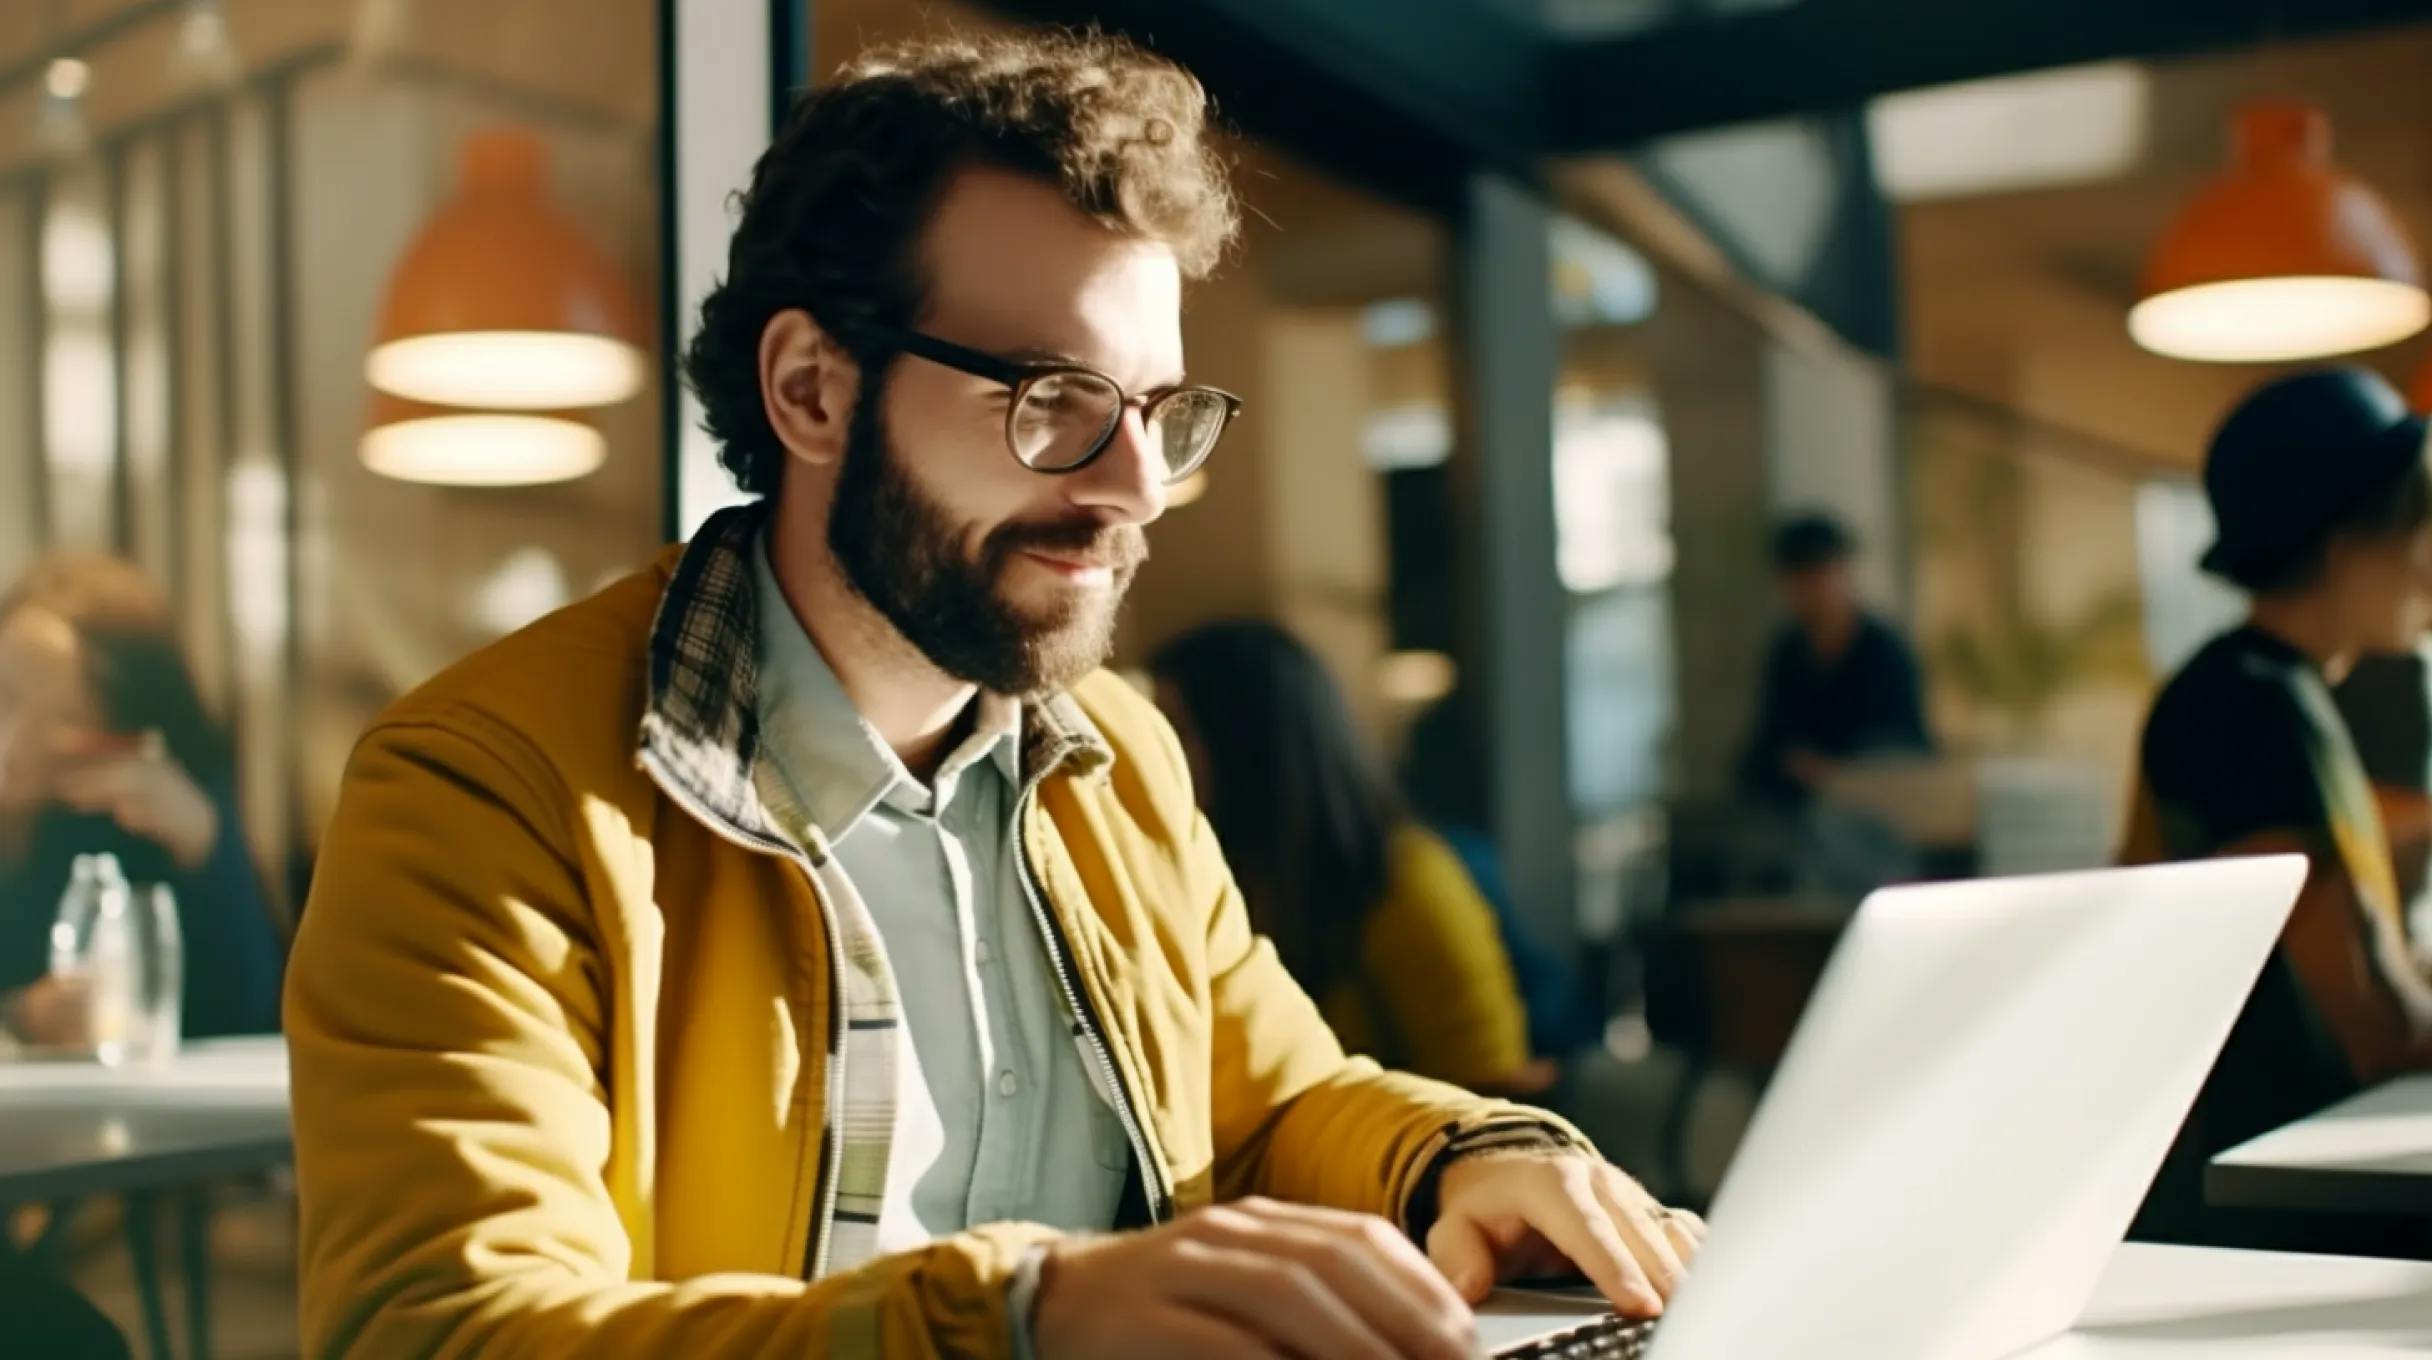  A man wearing glasses is focused on his laptop, engrossed in his work.